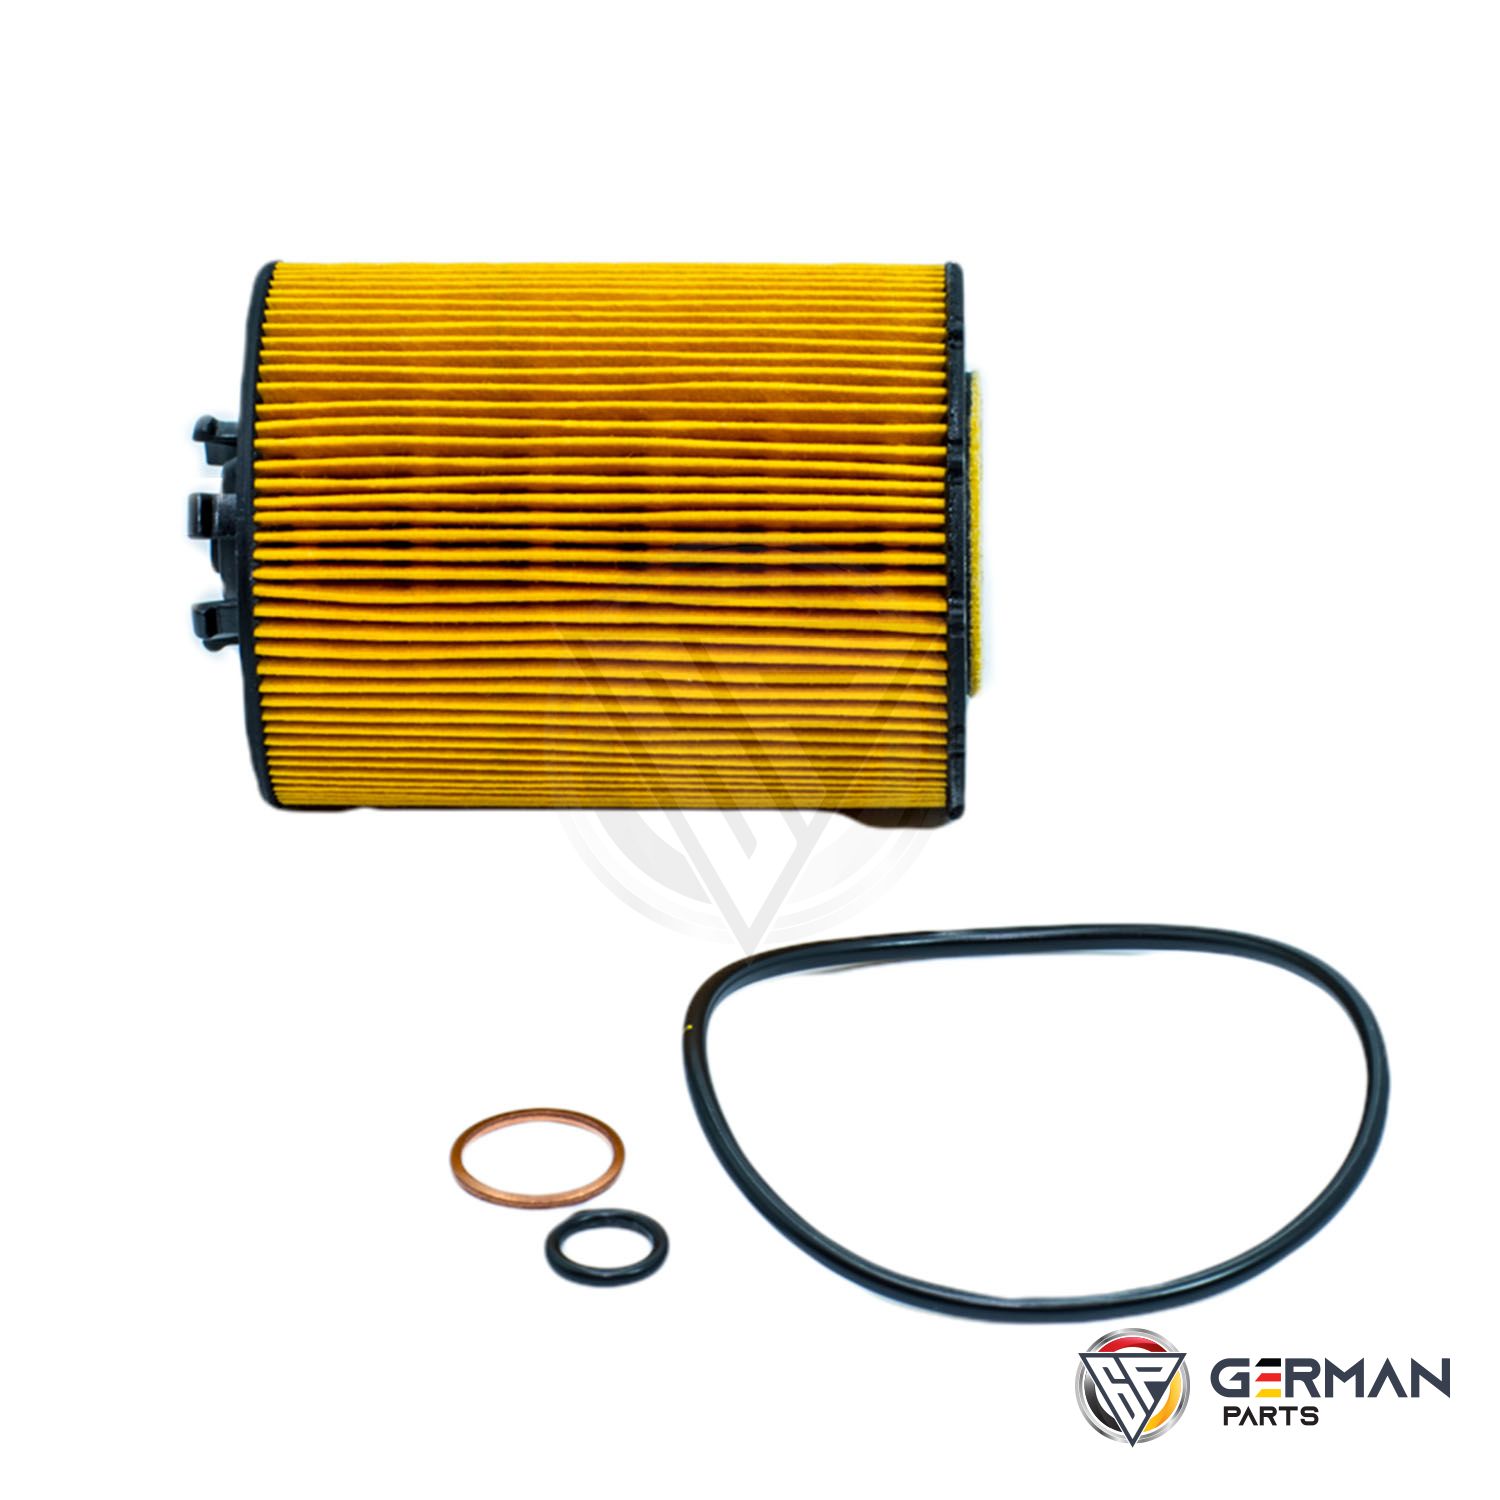 Buy BMW Oil Filter 11427542021 - German Parts